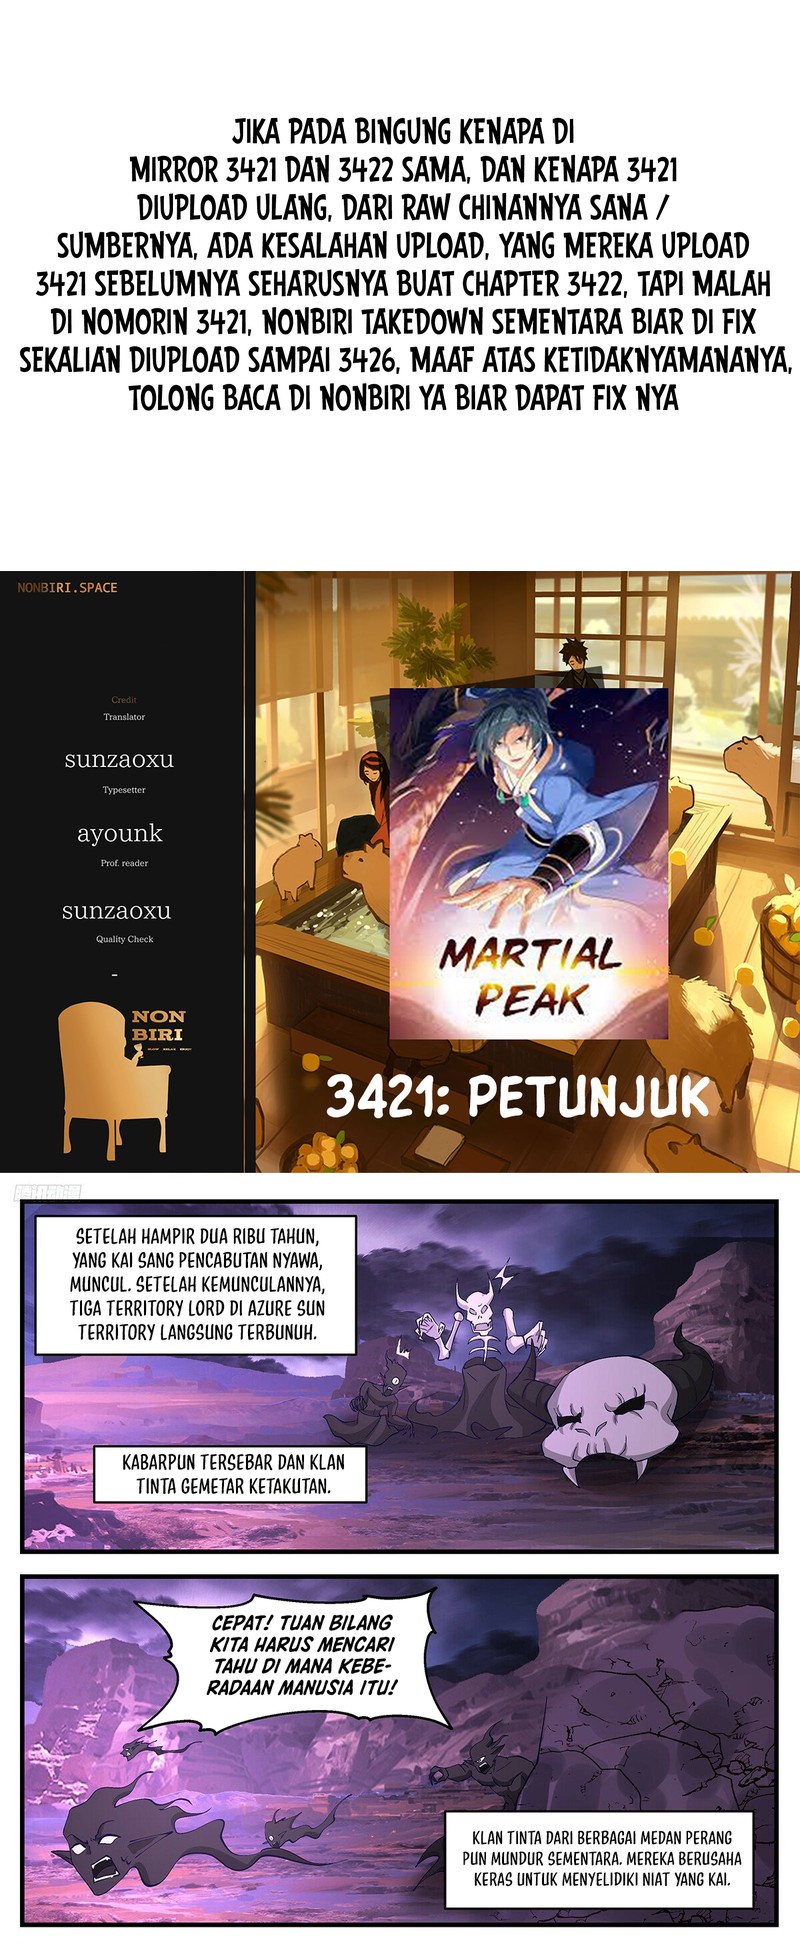 Martial Peak Chapter 3422 Image 0